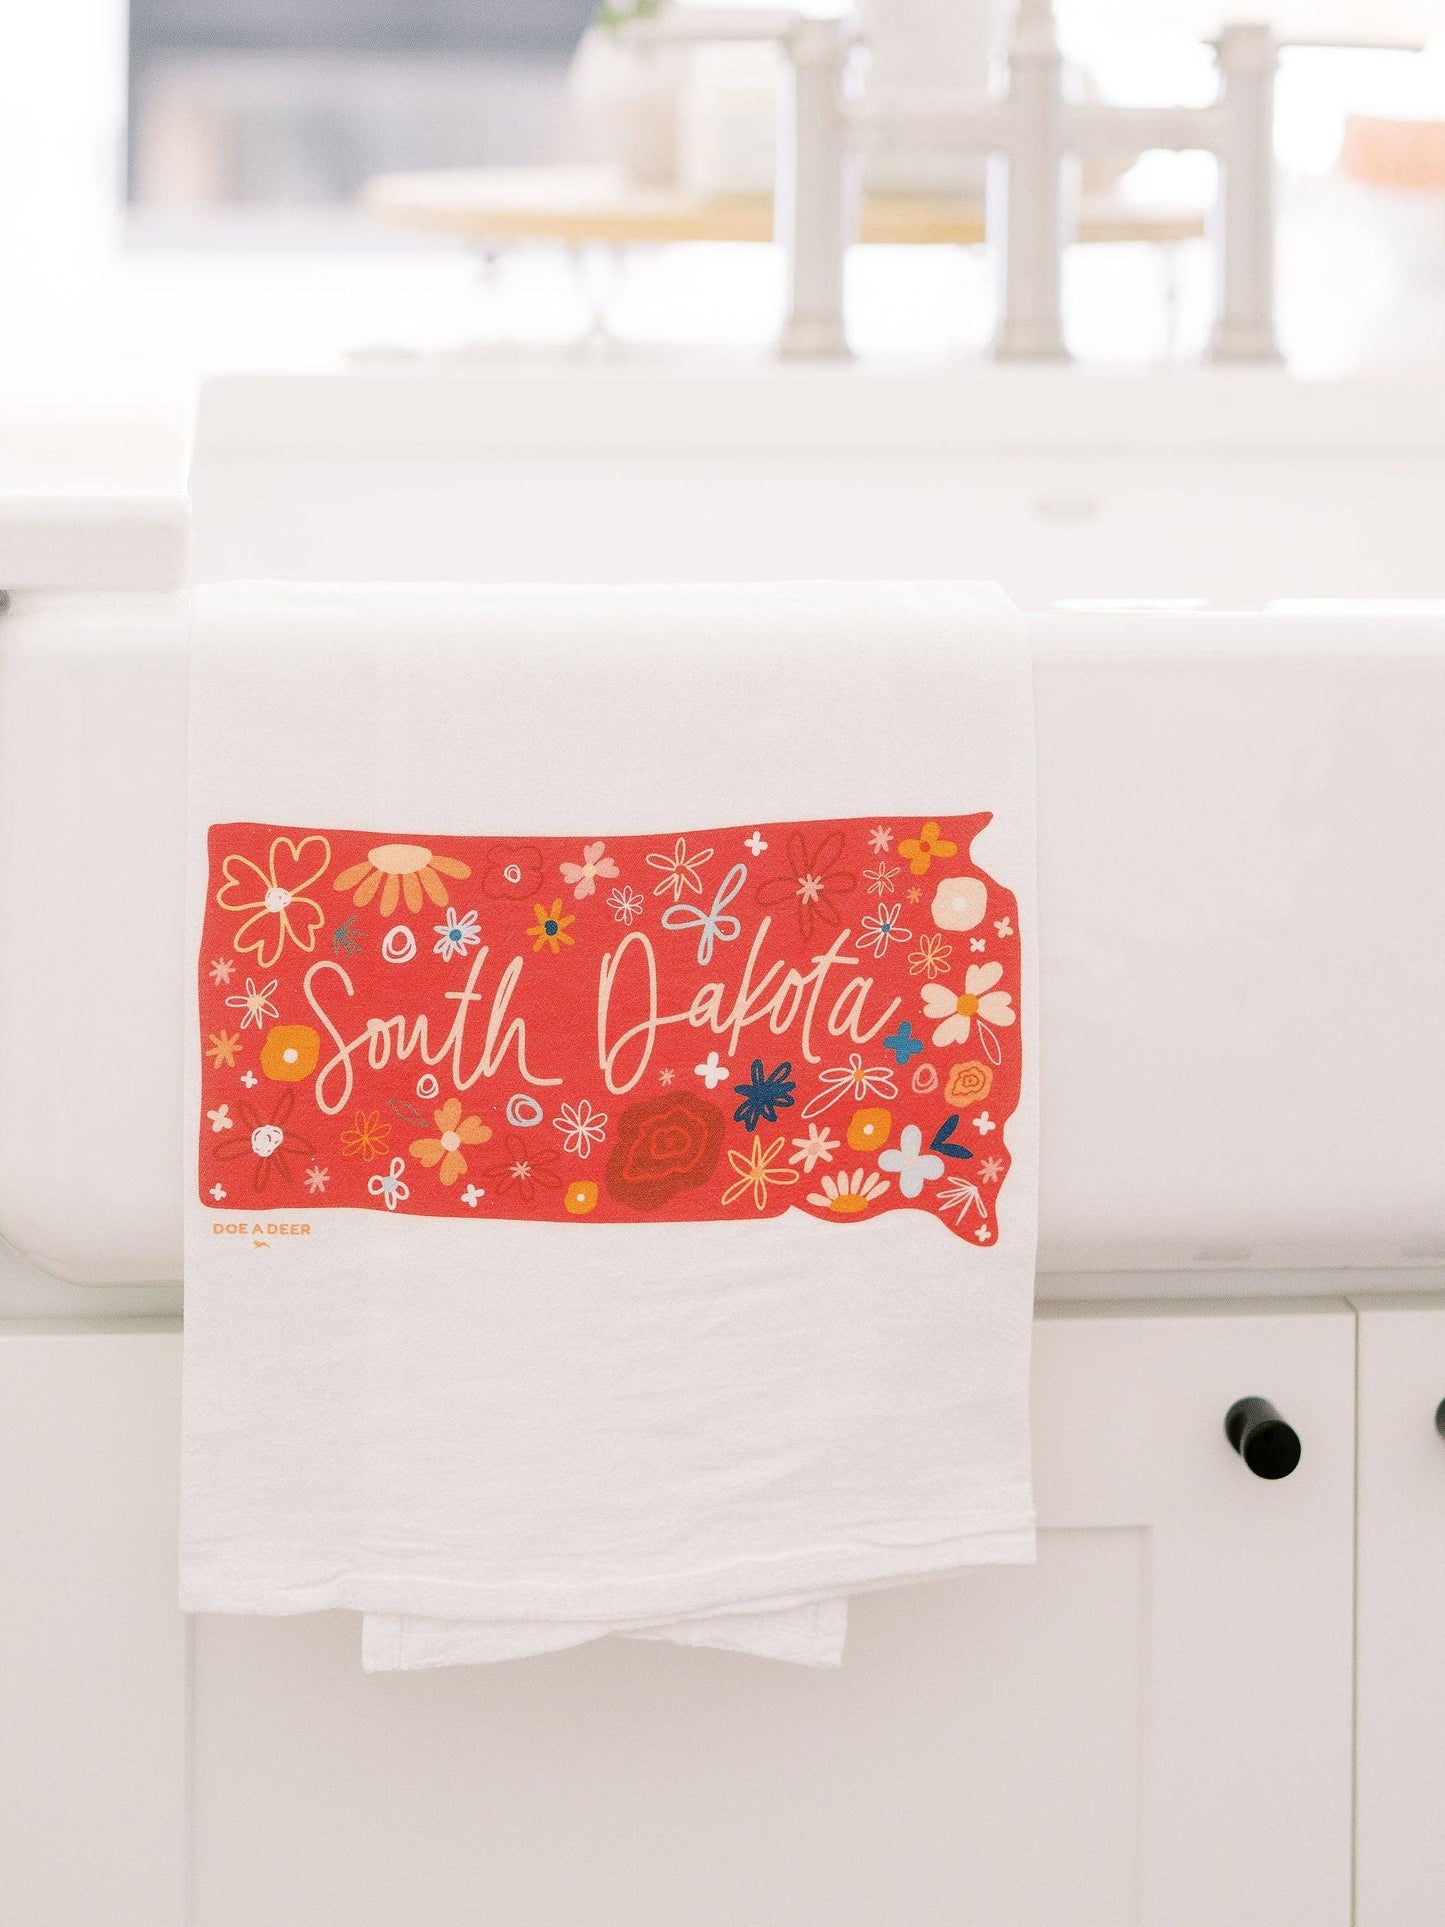 South Dakota Floral Flour Sack Towel | Kitchen Towel